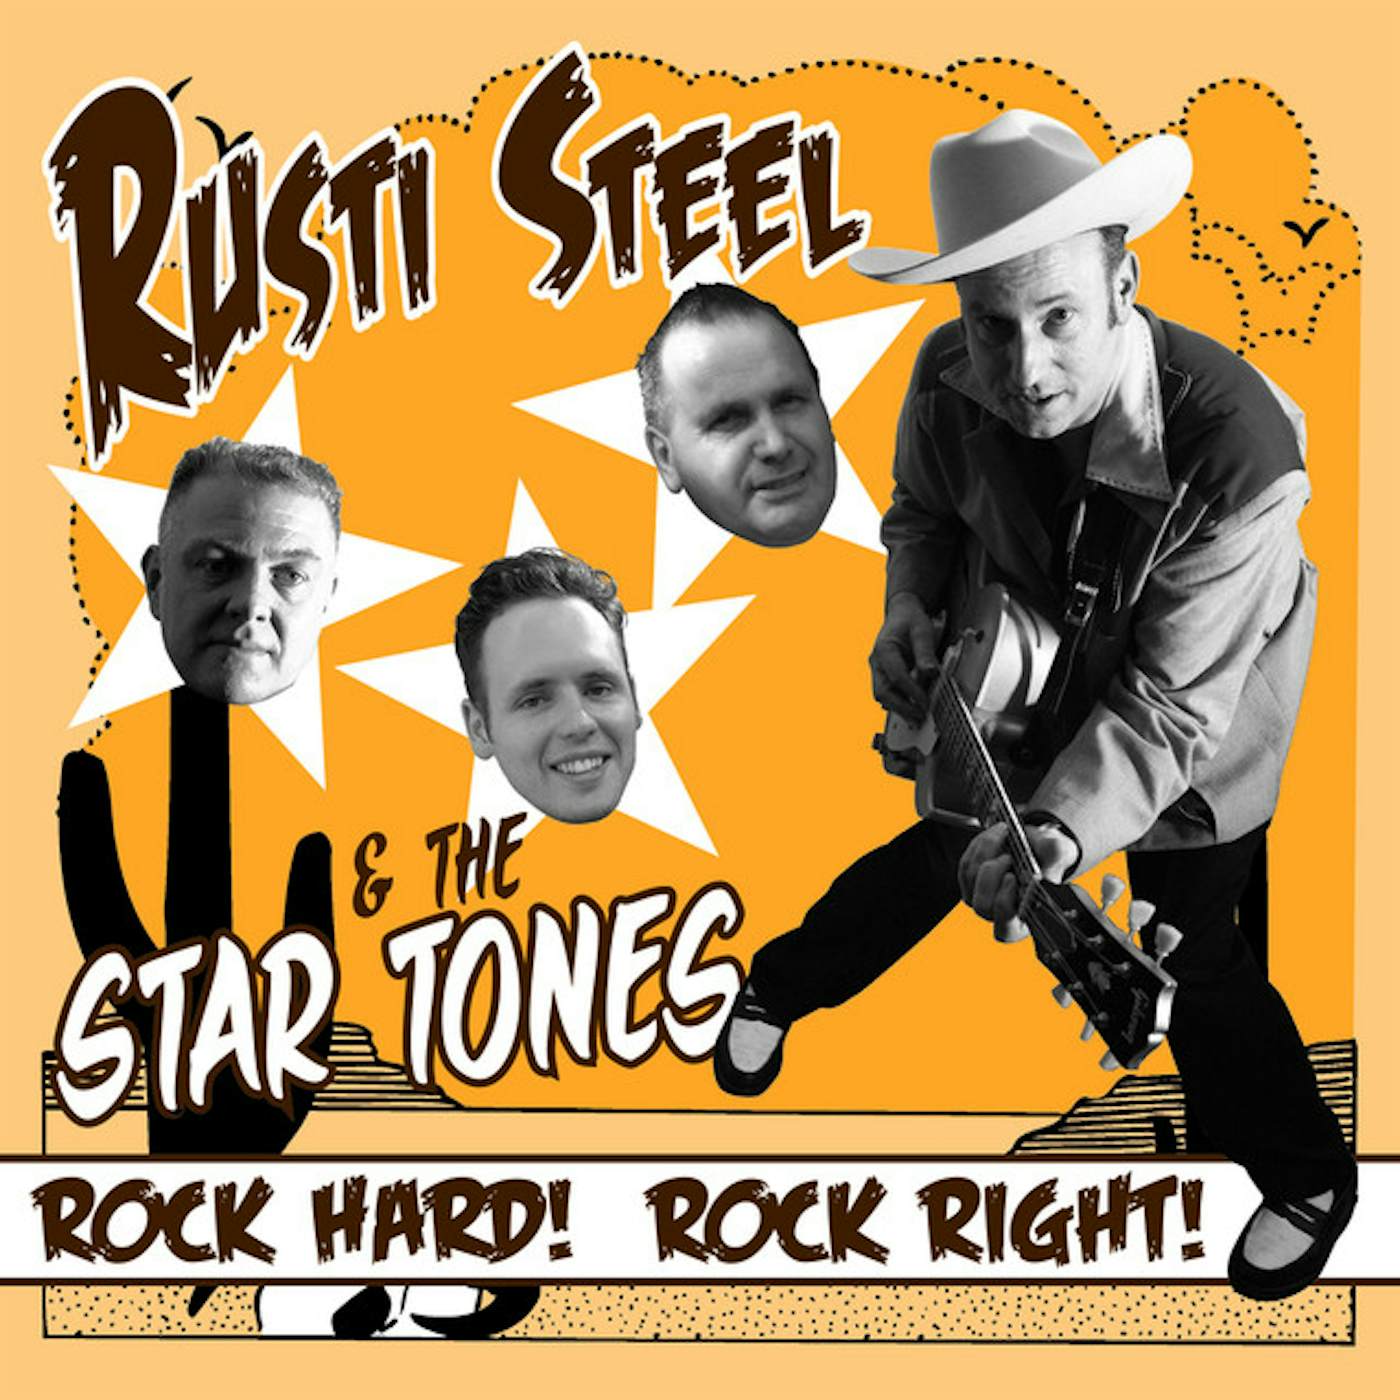 Rusti Steel & The Star Tones ROCK HARD ROCK TIGHT Vinyl Record